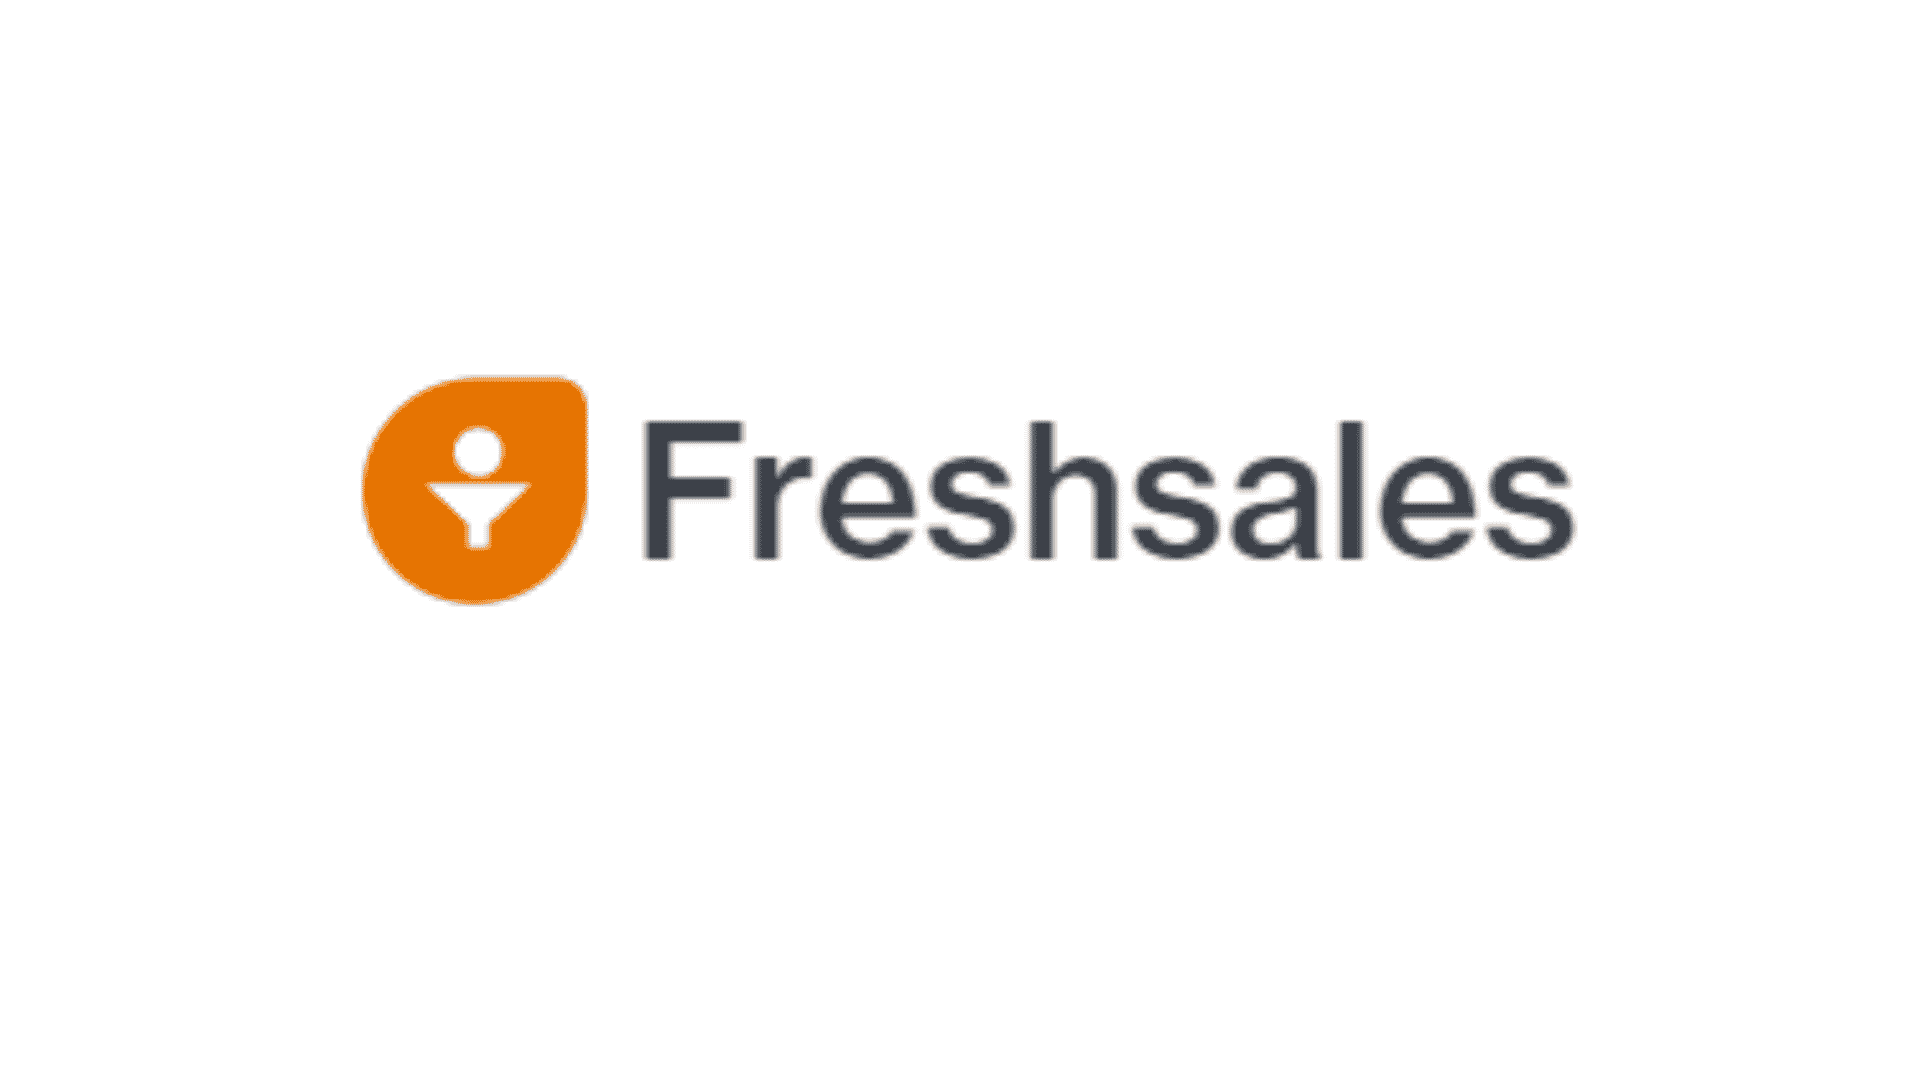 Freshsales